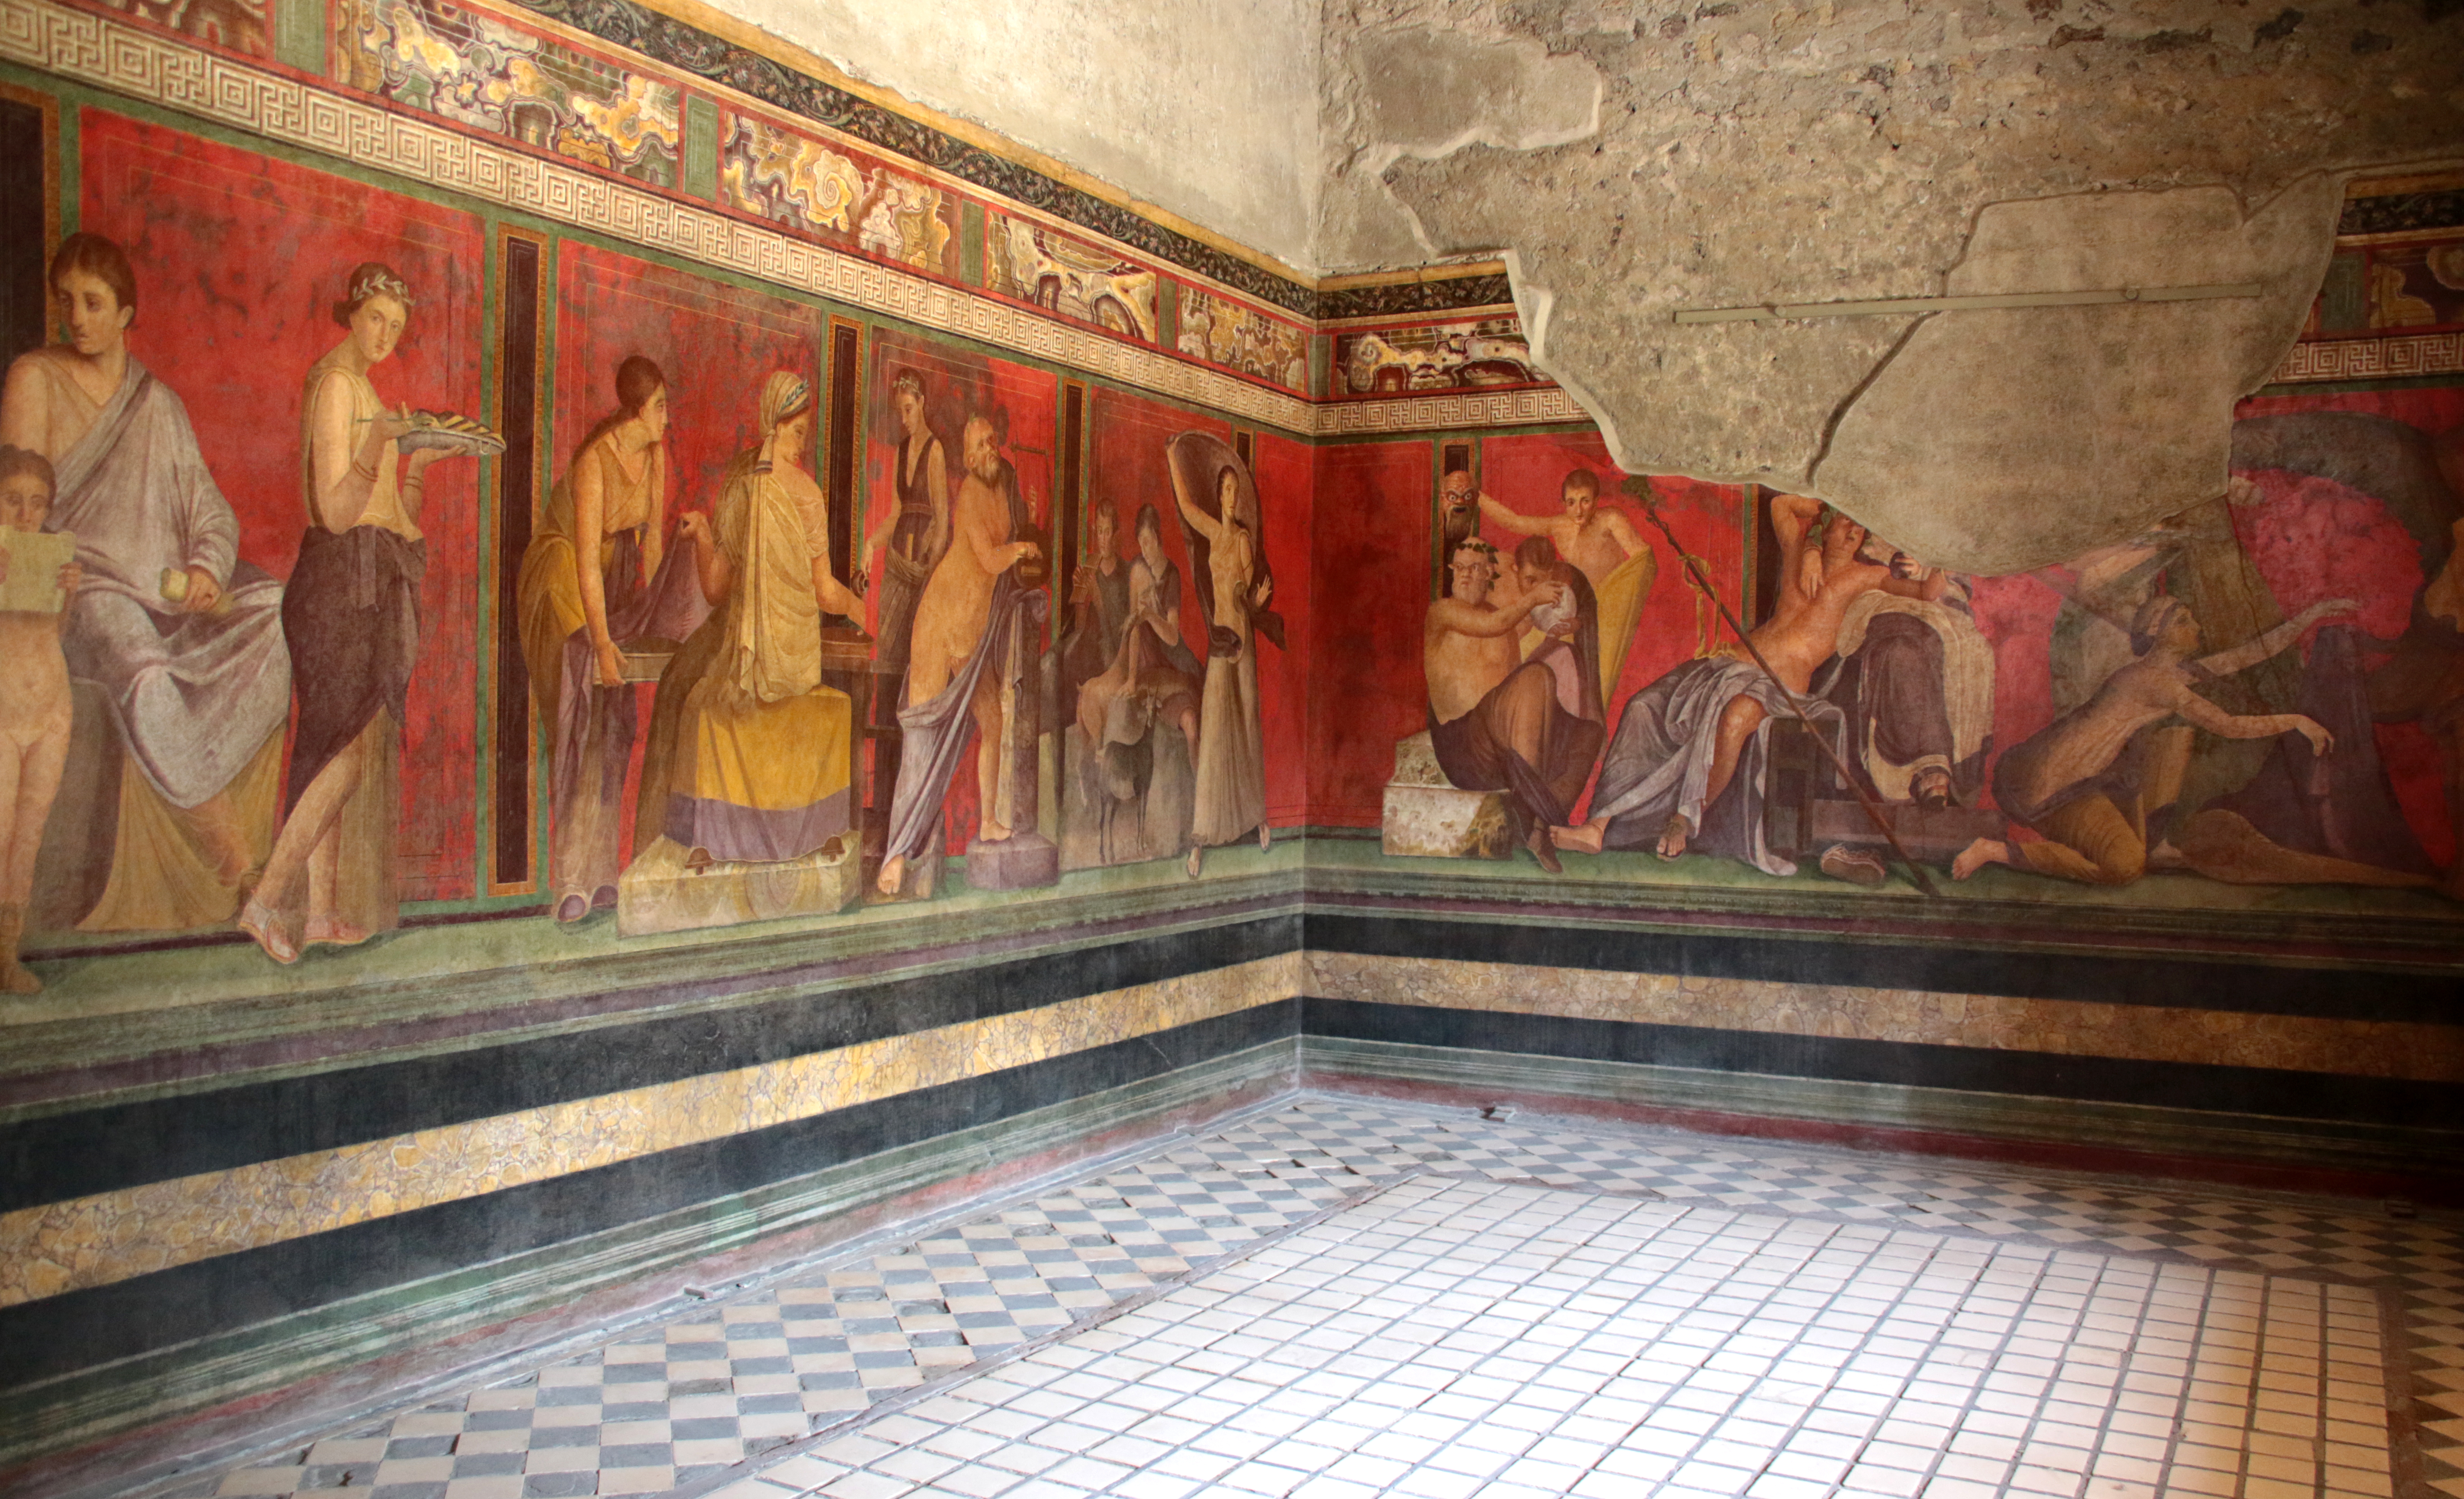 File:Villa dei Misteri - Pompei.jpg - Wikimedia Commons